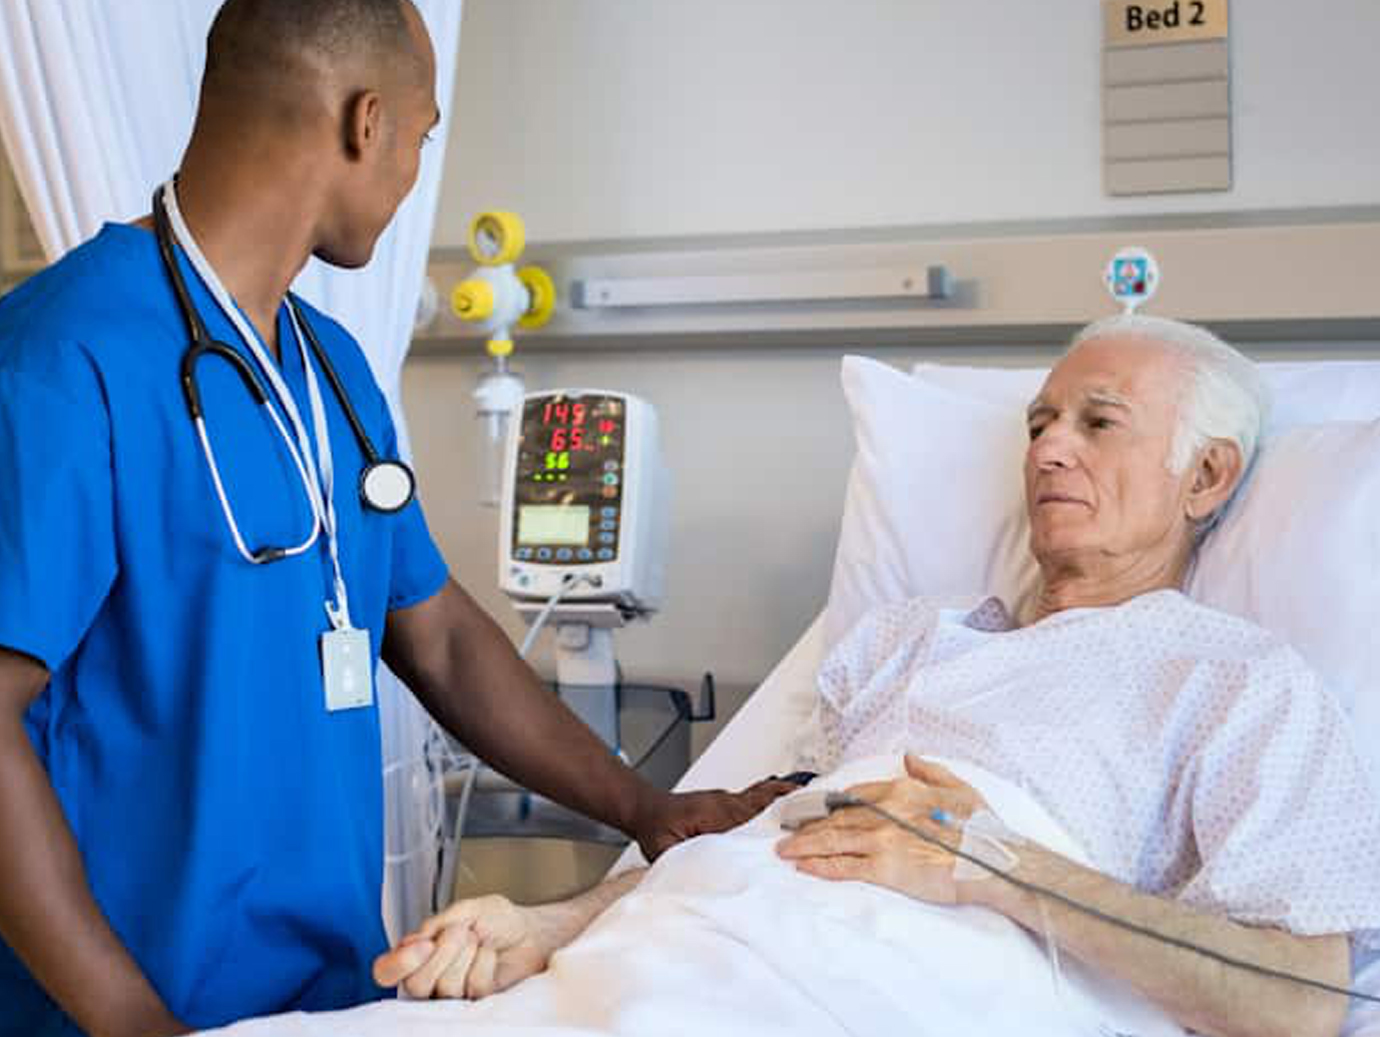 Male nurse standing by an elderly male patient in bed